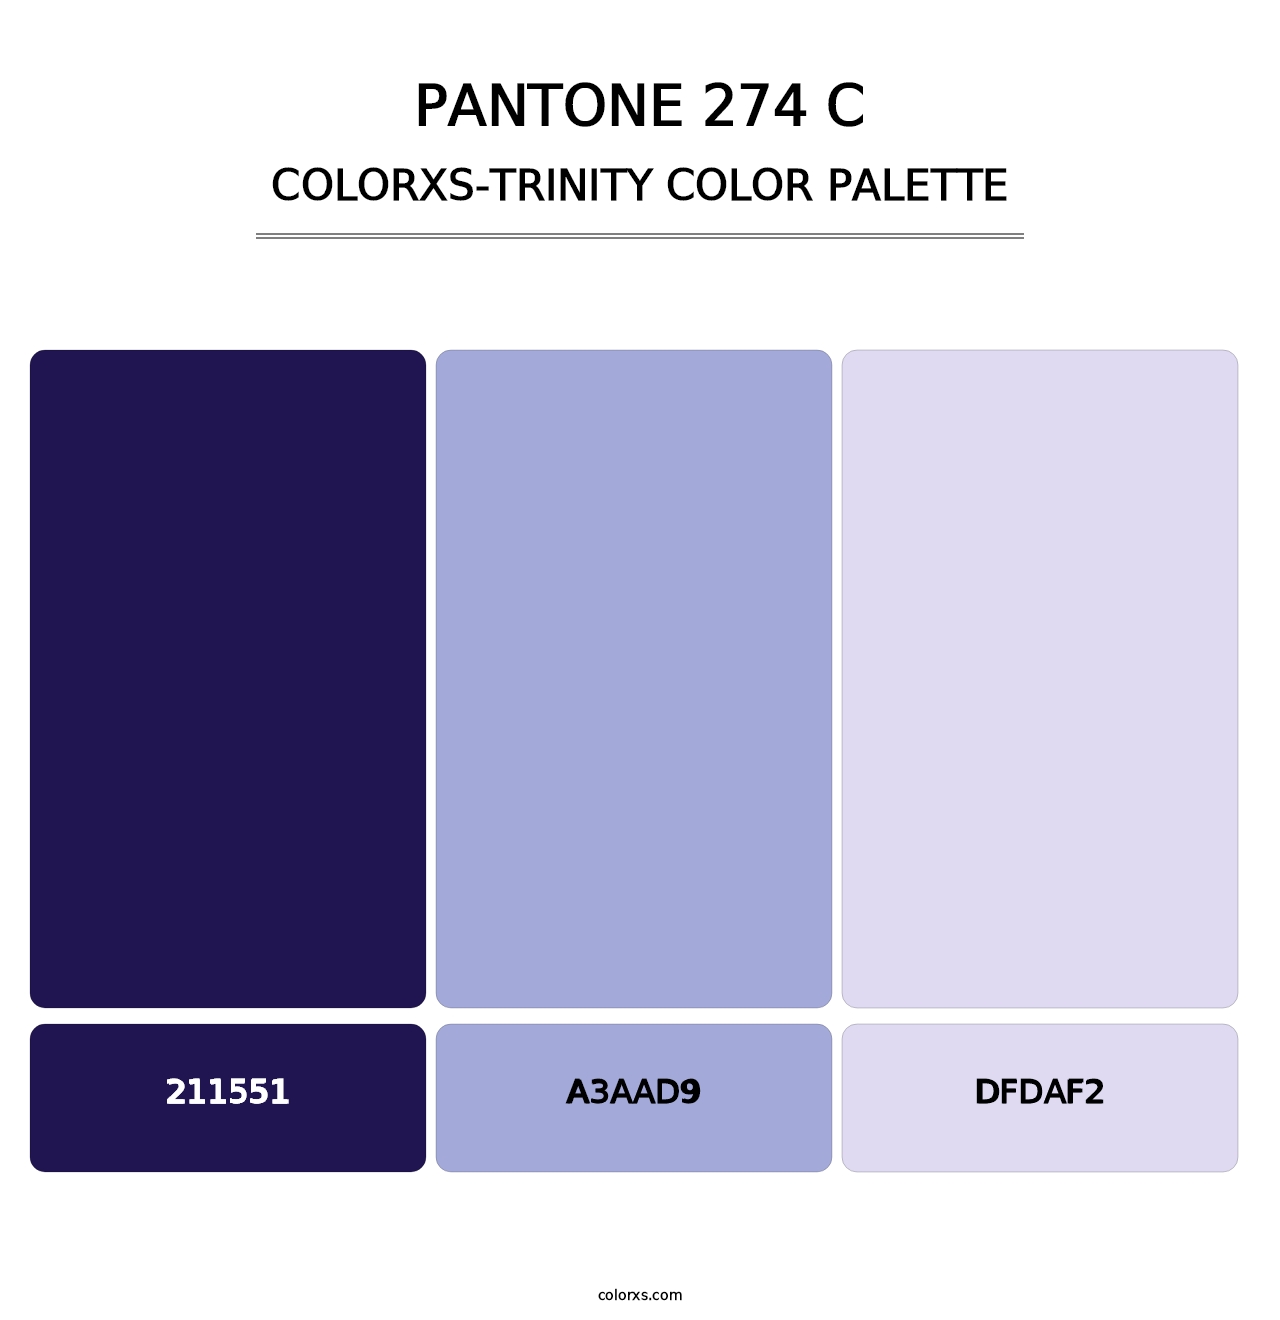 PANTONE 274 C - Colorxs Trinity Palette